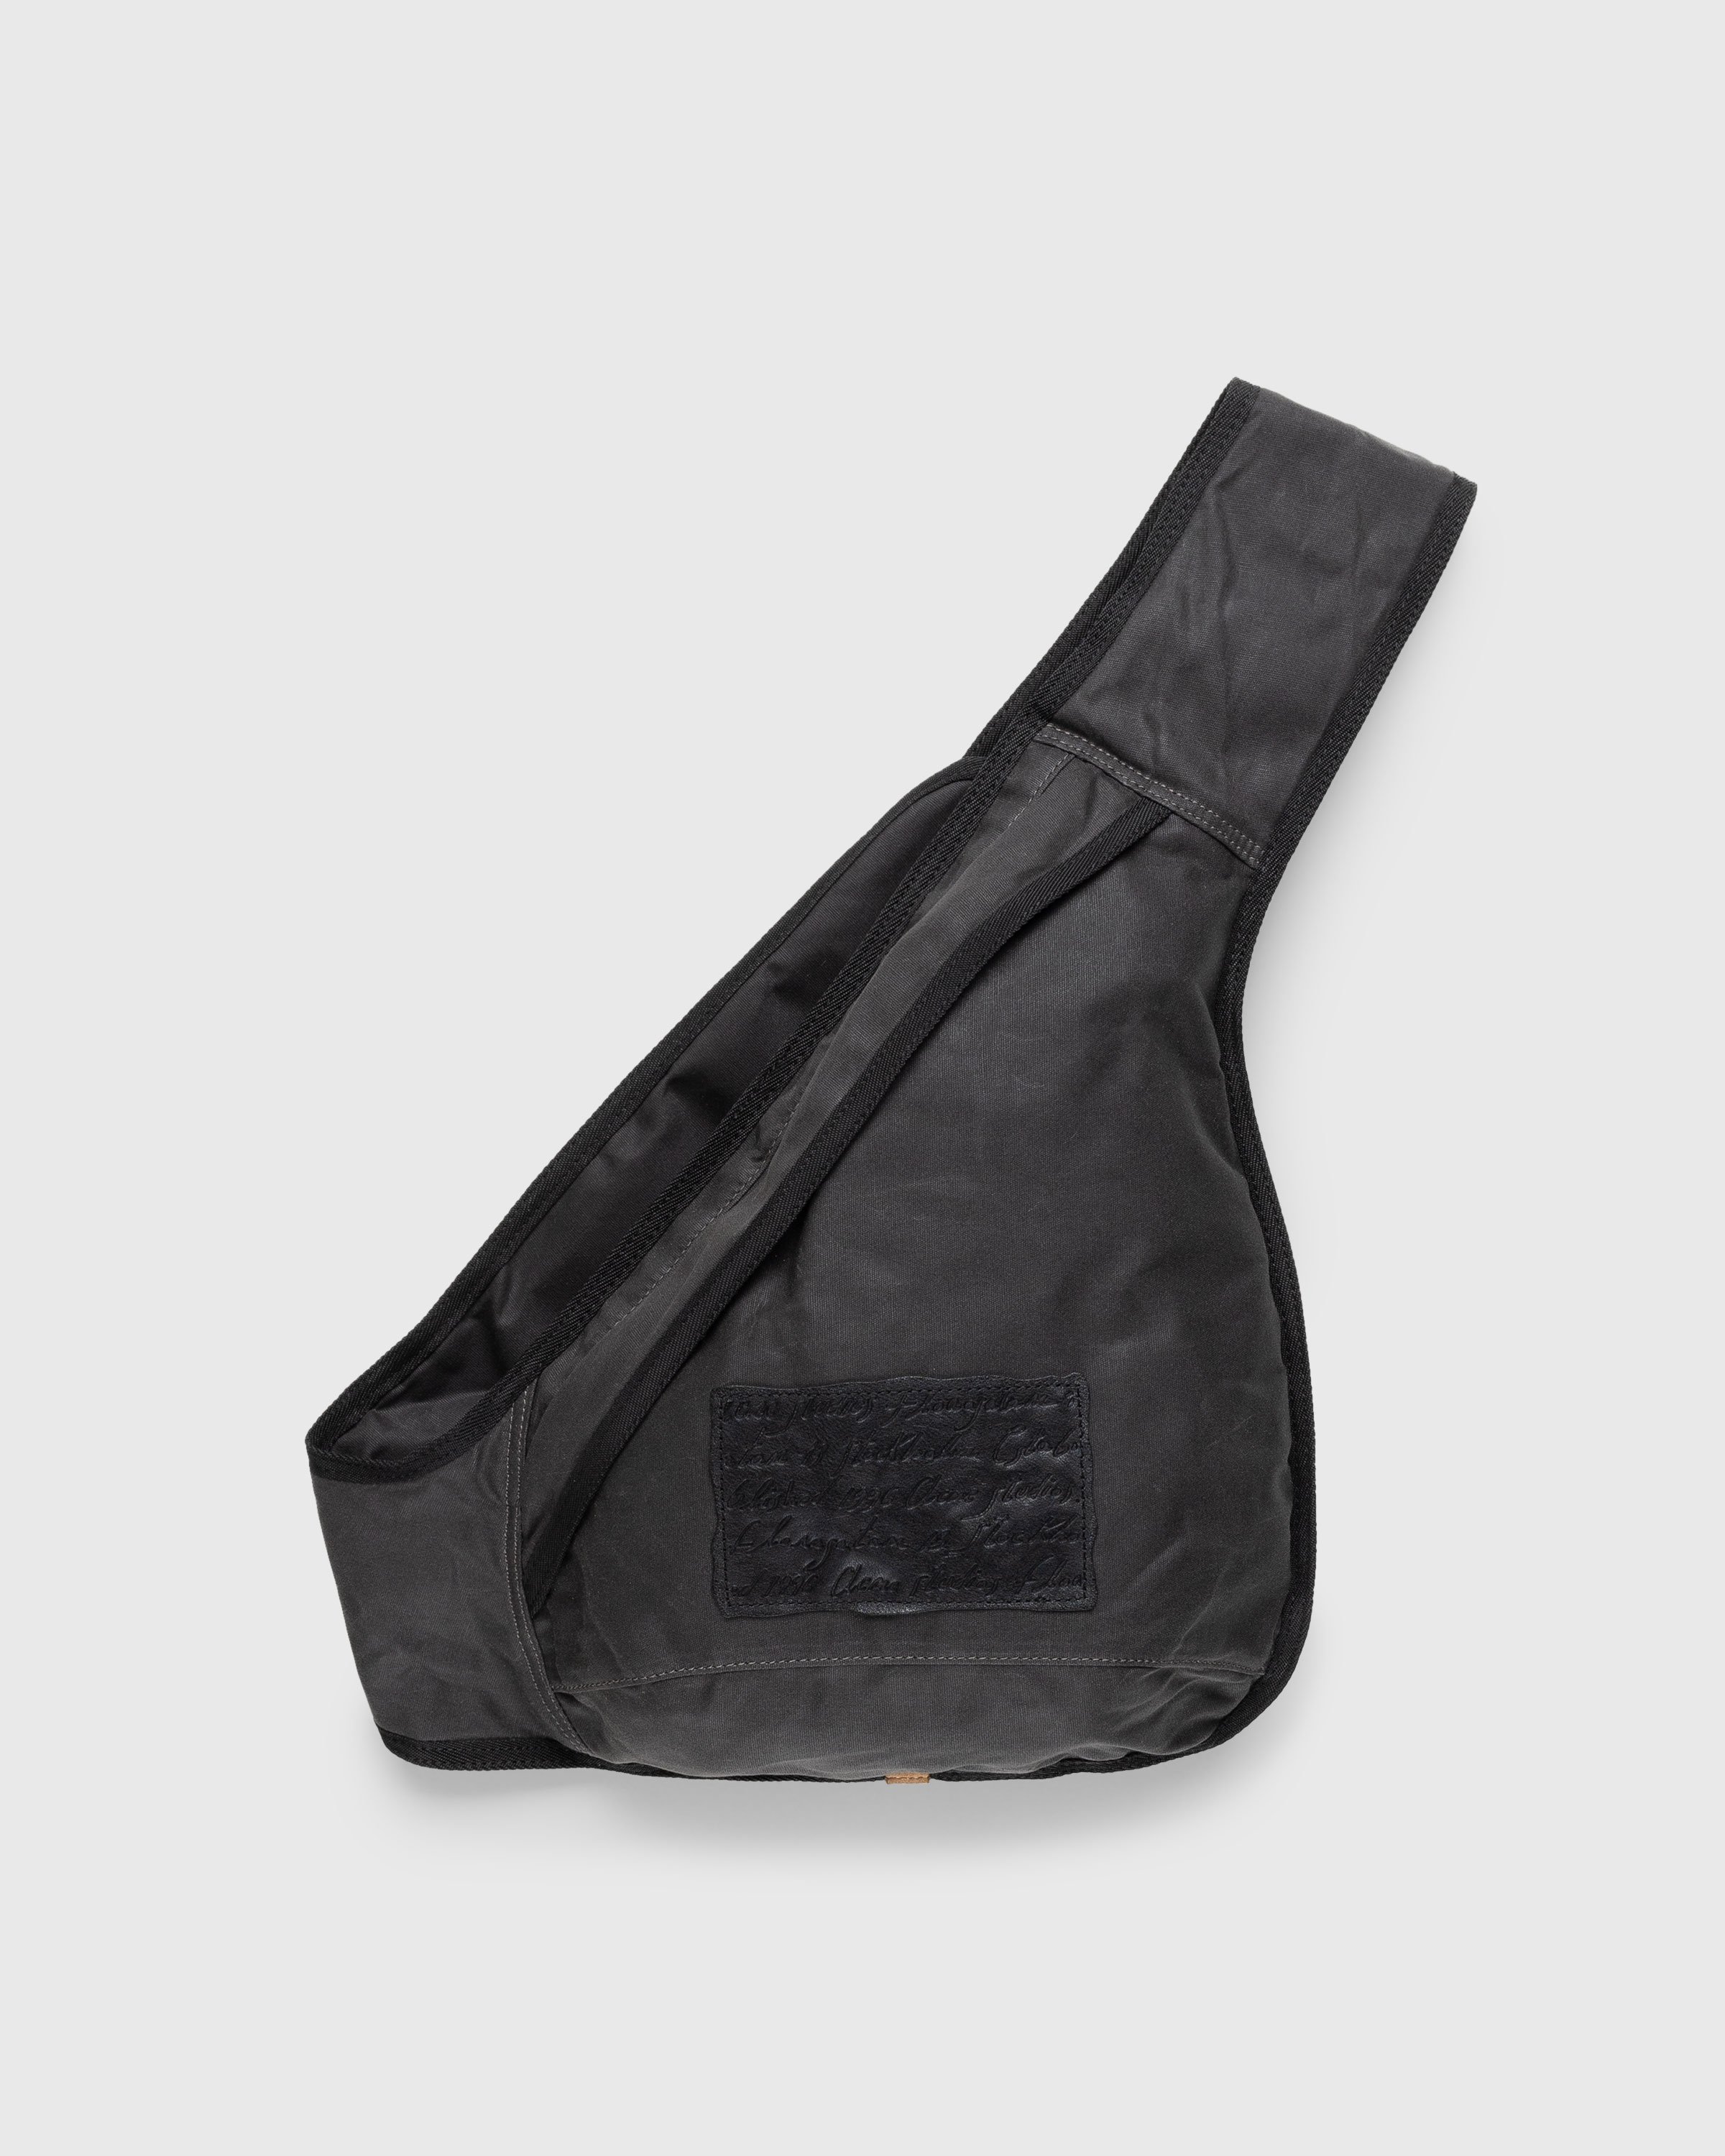 Acne Studios - Sling Backpack Grey/Black - Accessories - Multi - Image 1